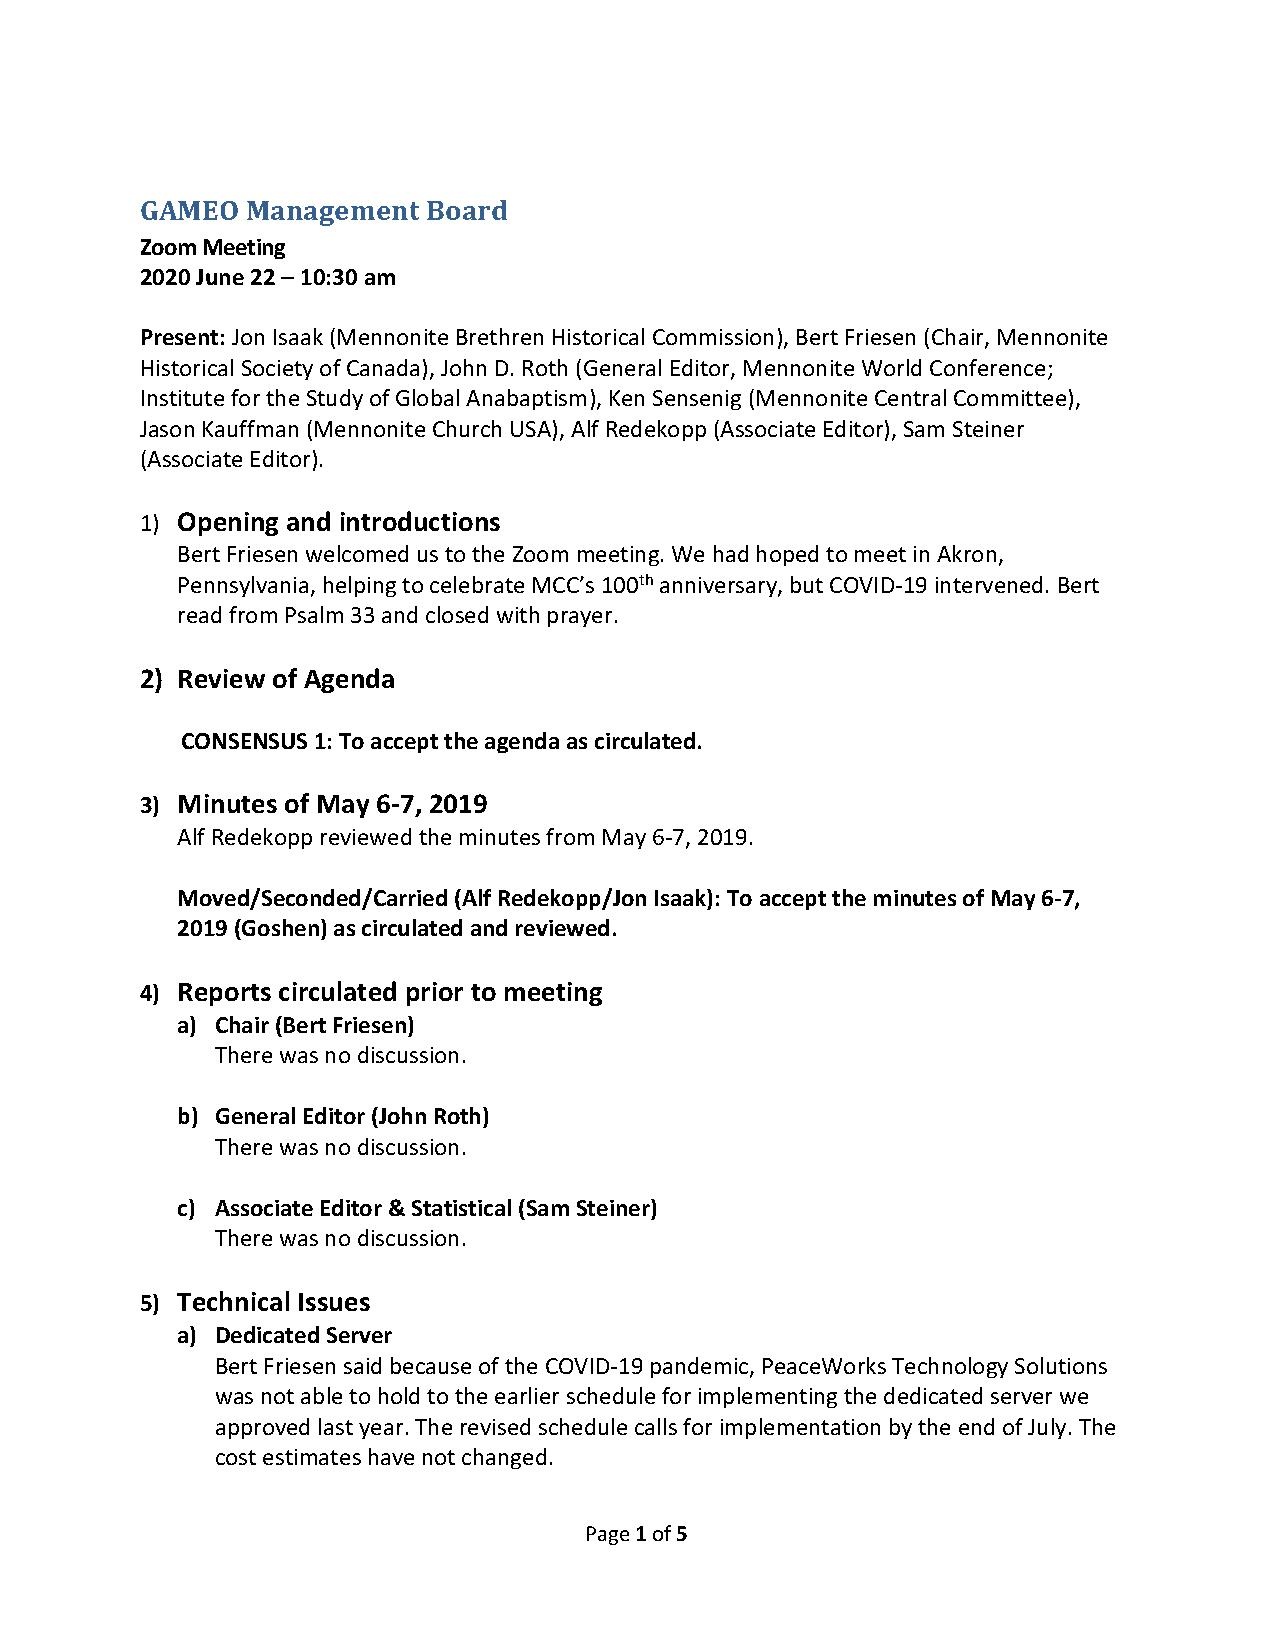 GAMEO Management Board 2020 06 22.pdf